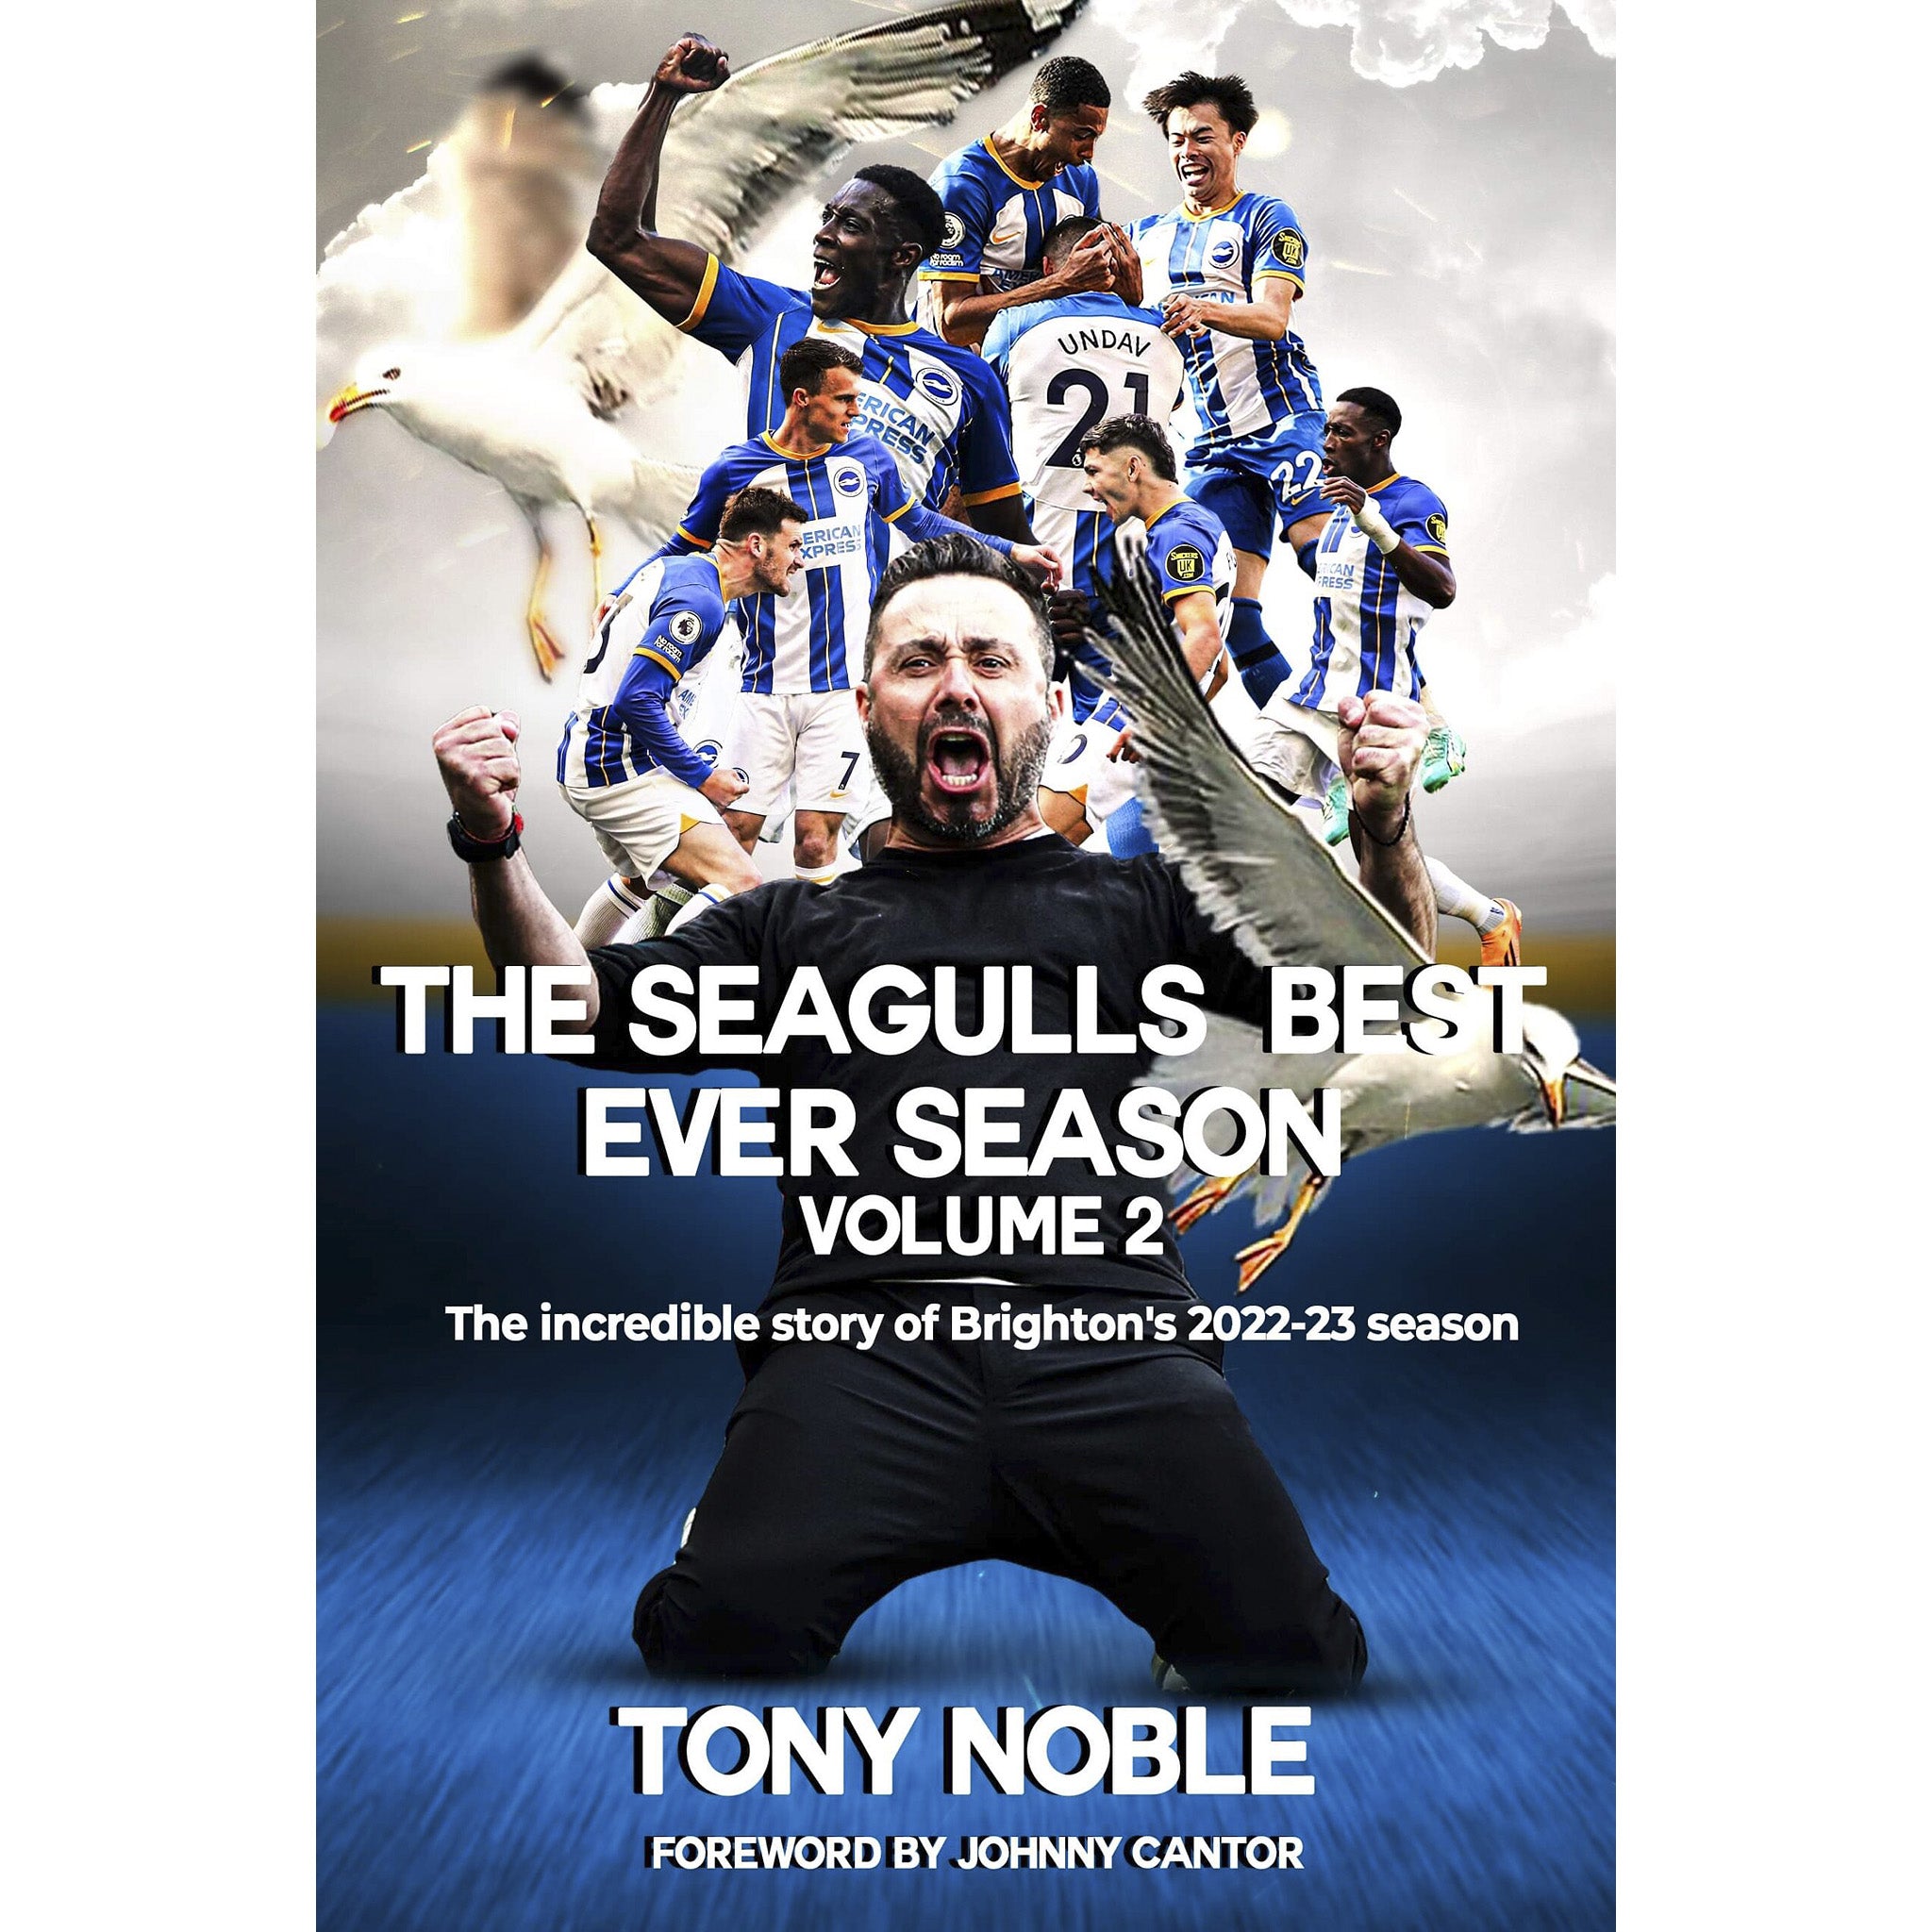 The Seagulls Best-Ever Season Volume 2 – The incredible story of Brighton's 2022-23 season